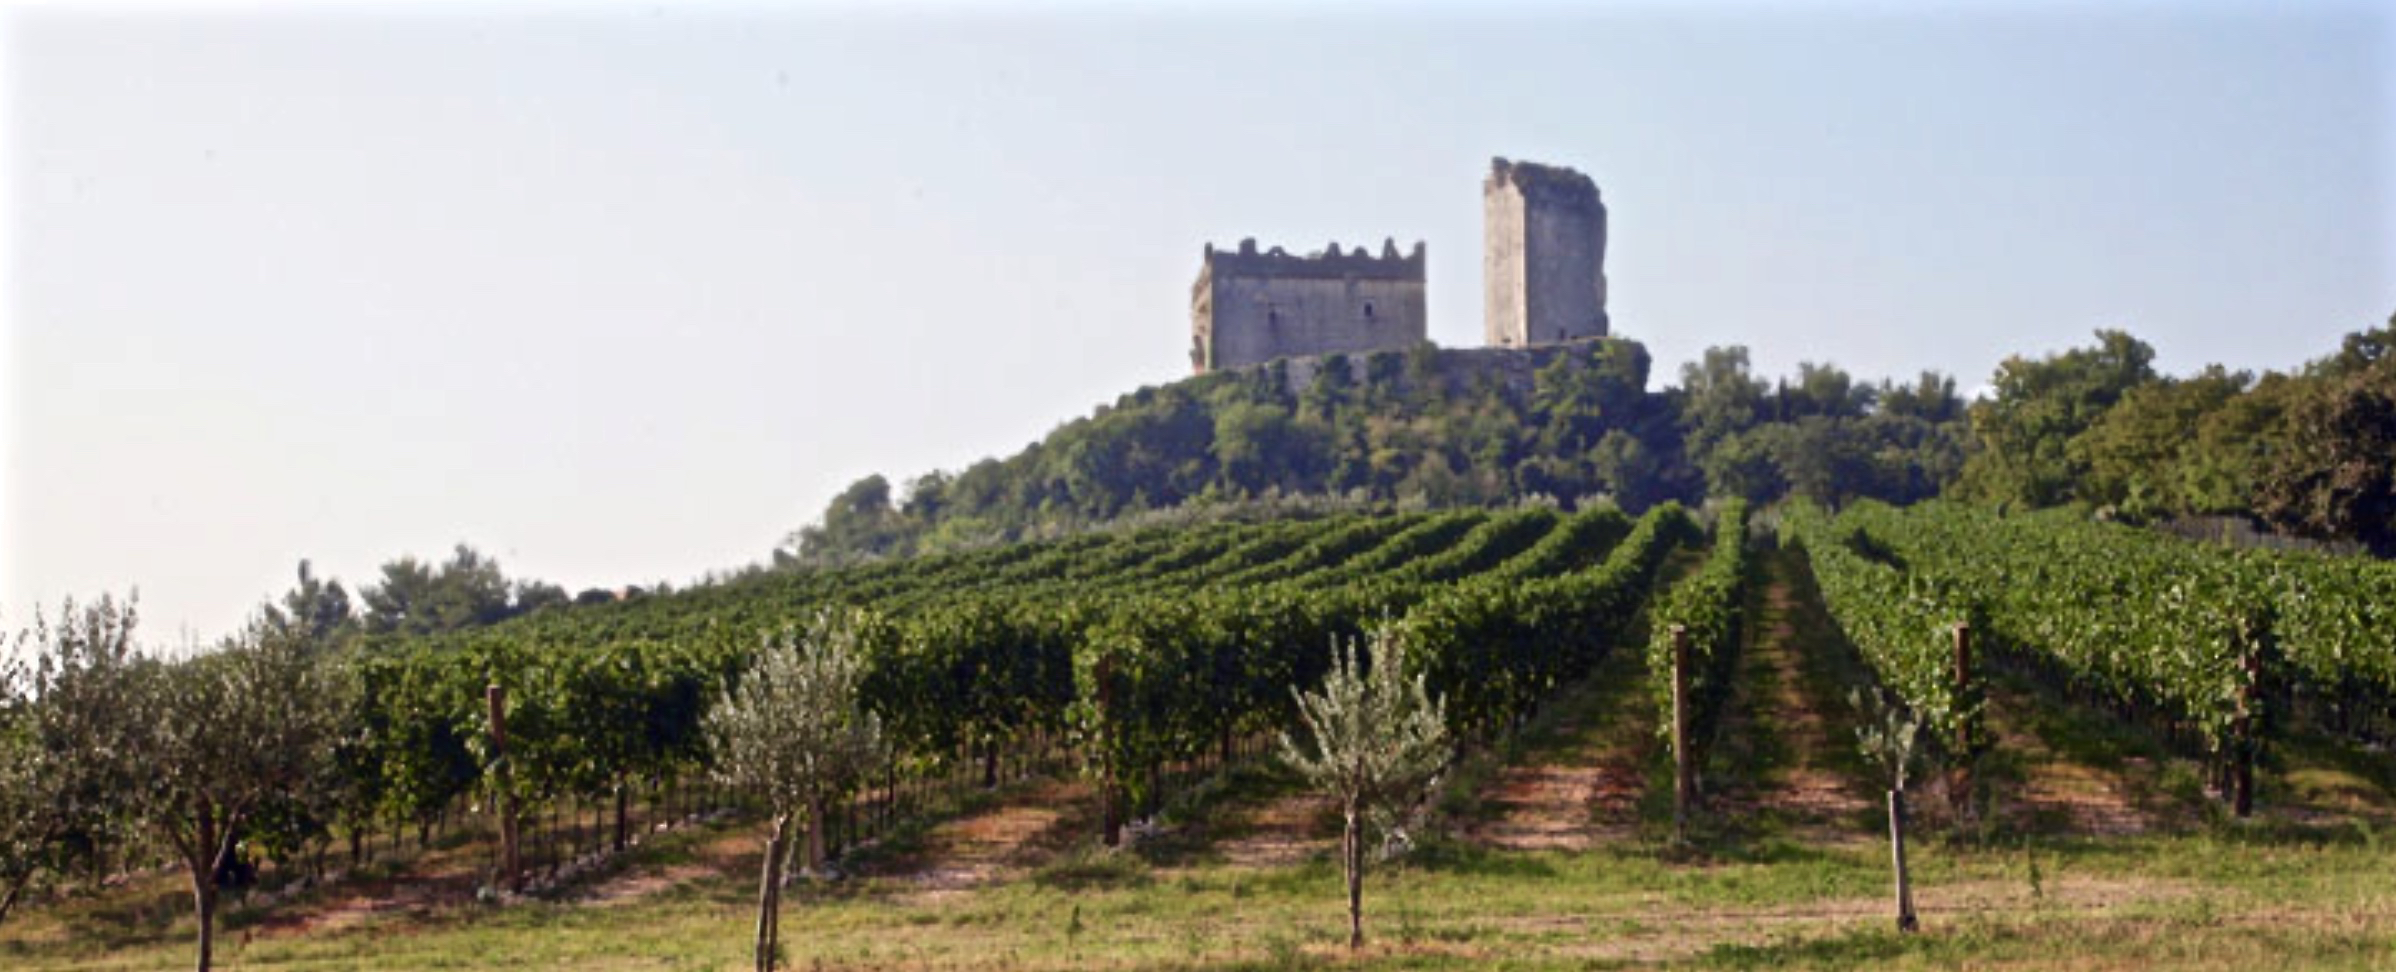 Latium Wines from the Veneto